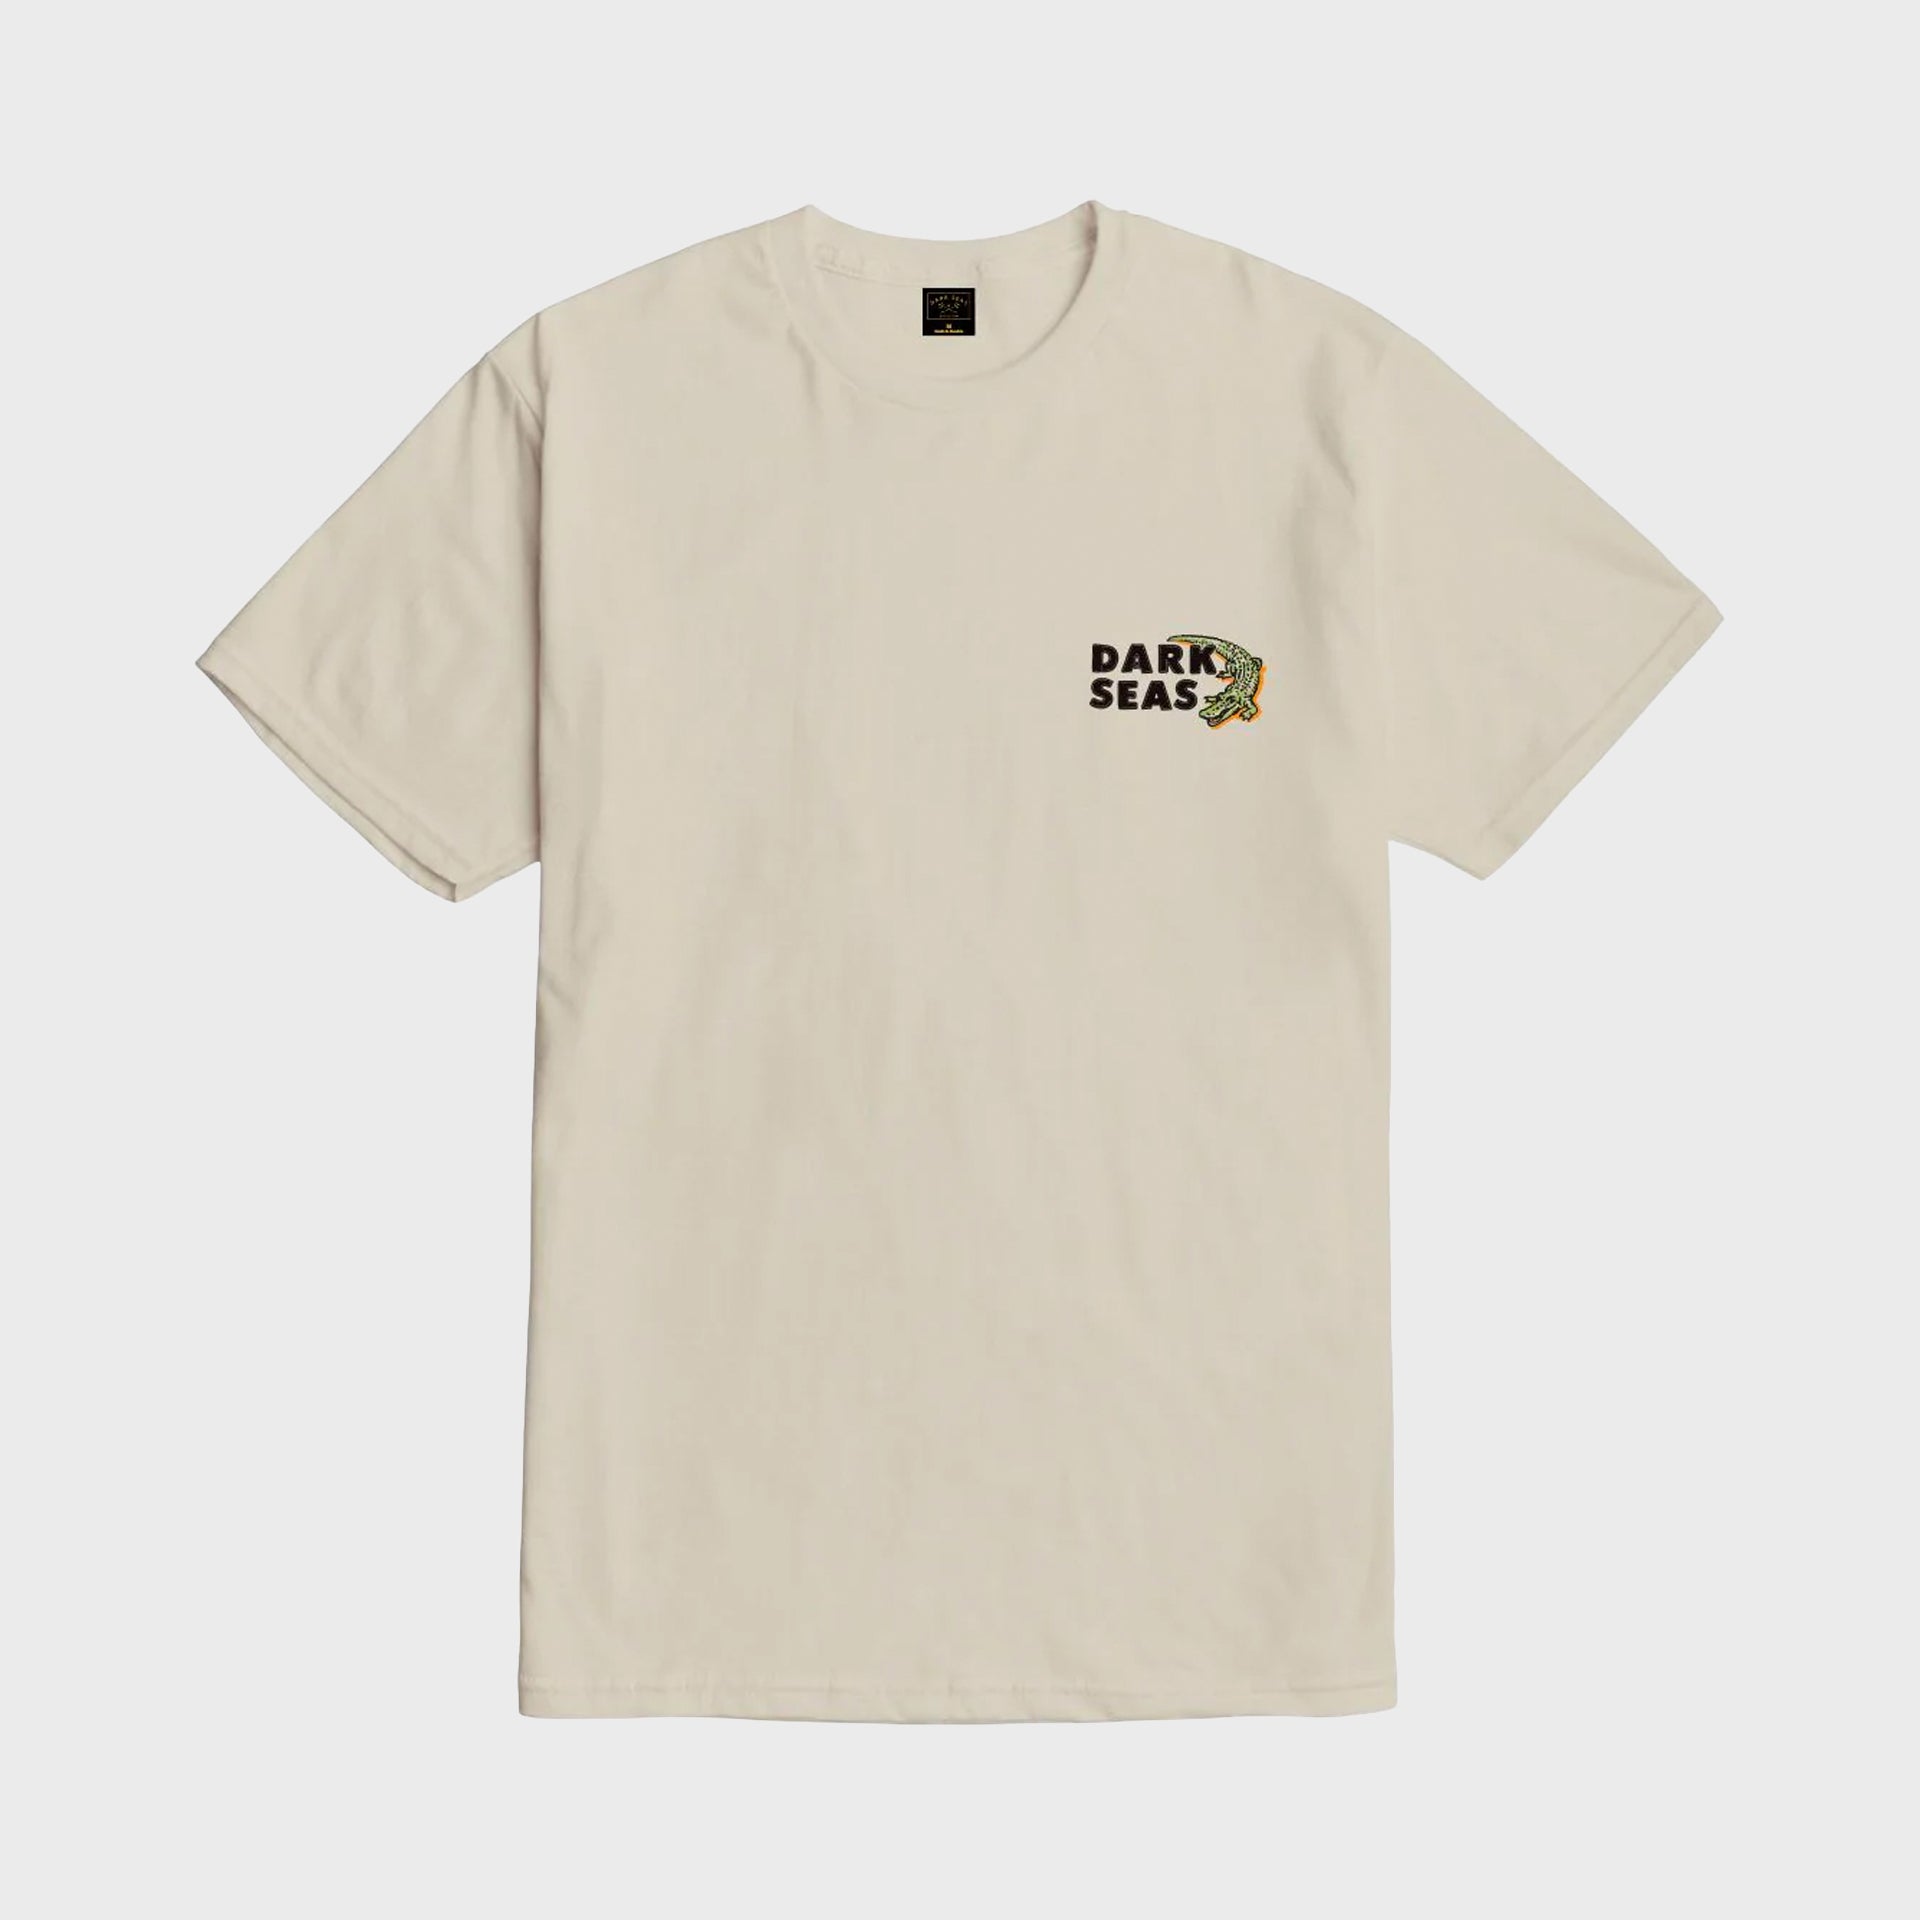 Dark Seas Florida T-Shirt - Cream - ManGo Surfing